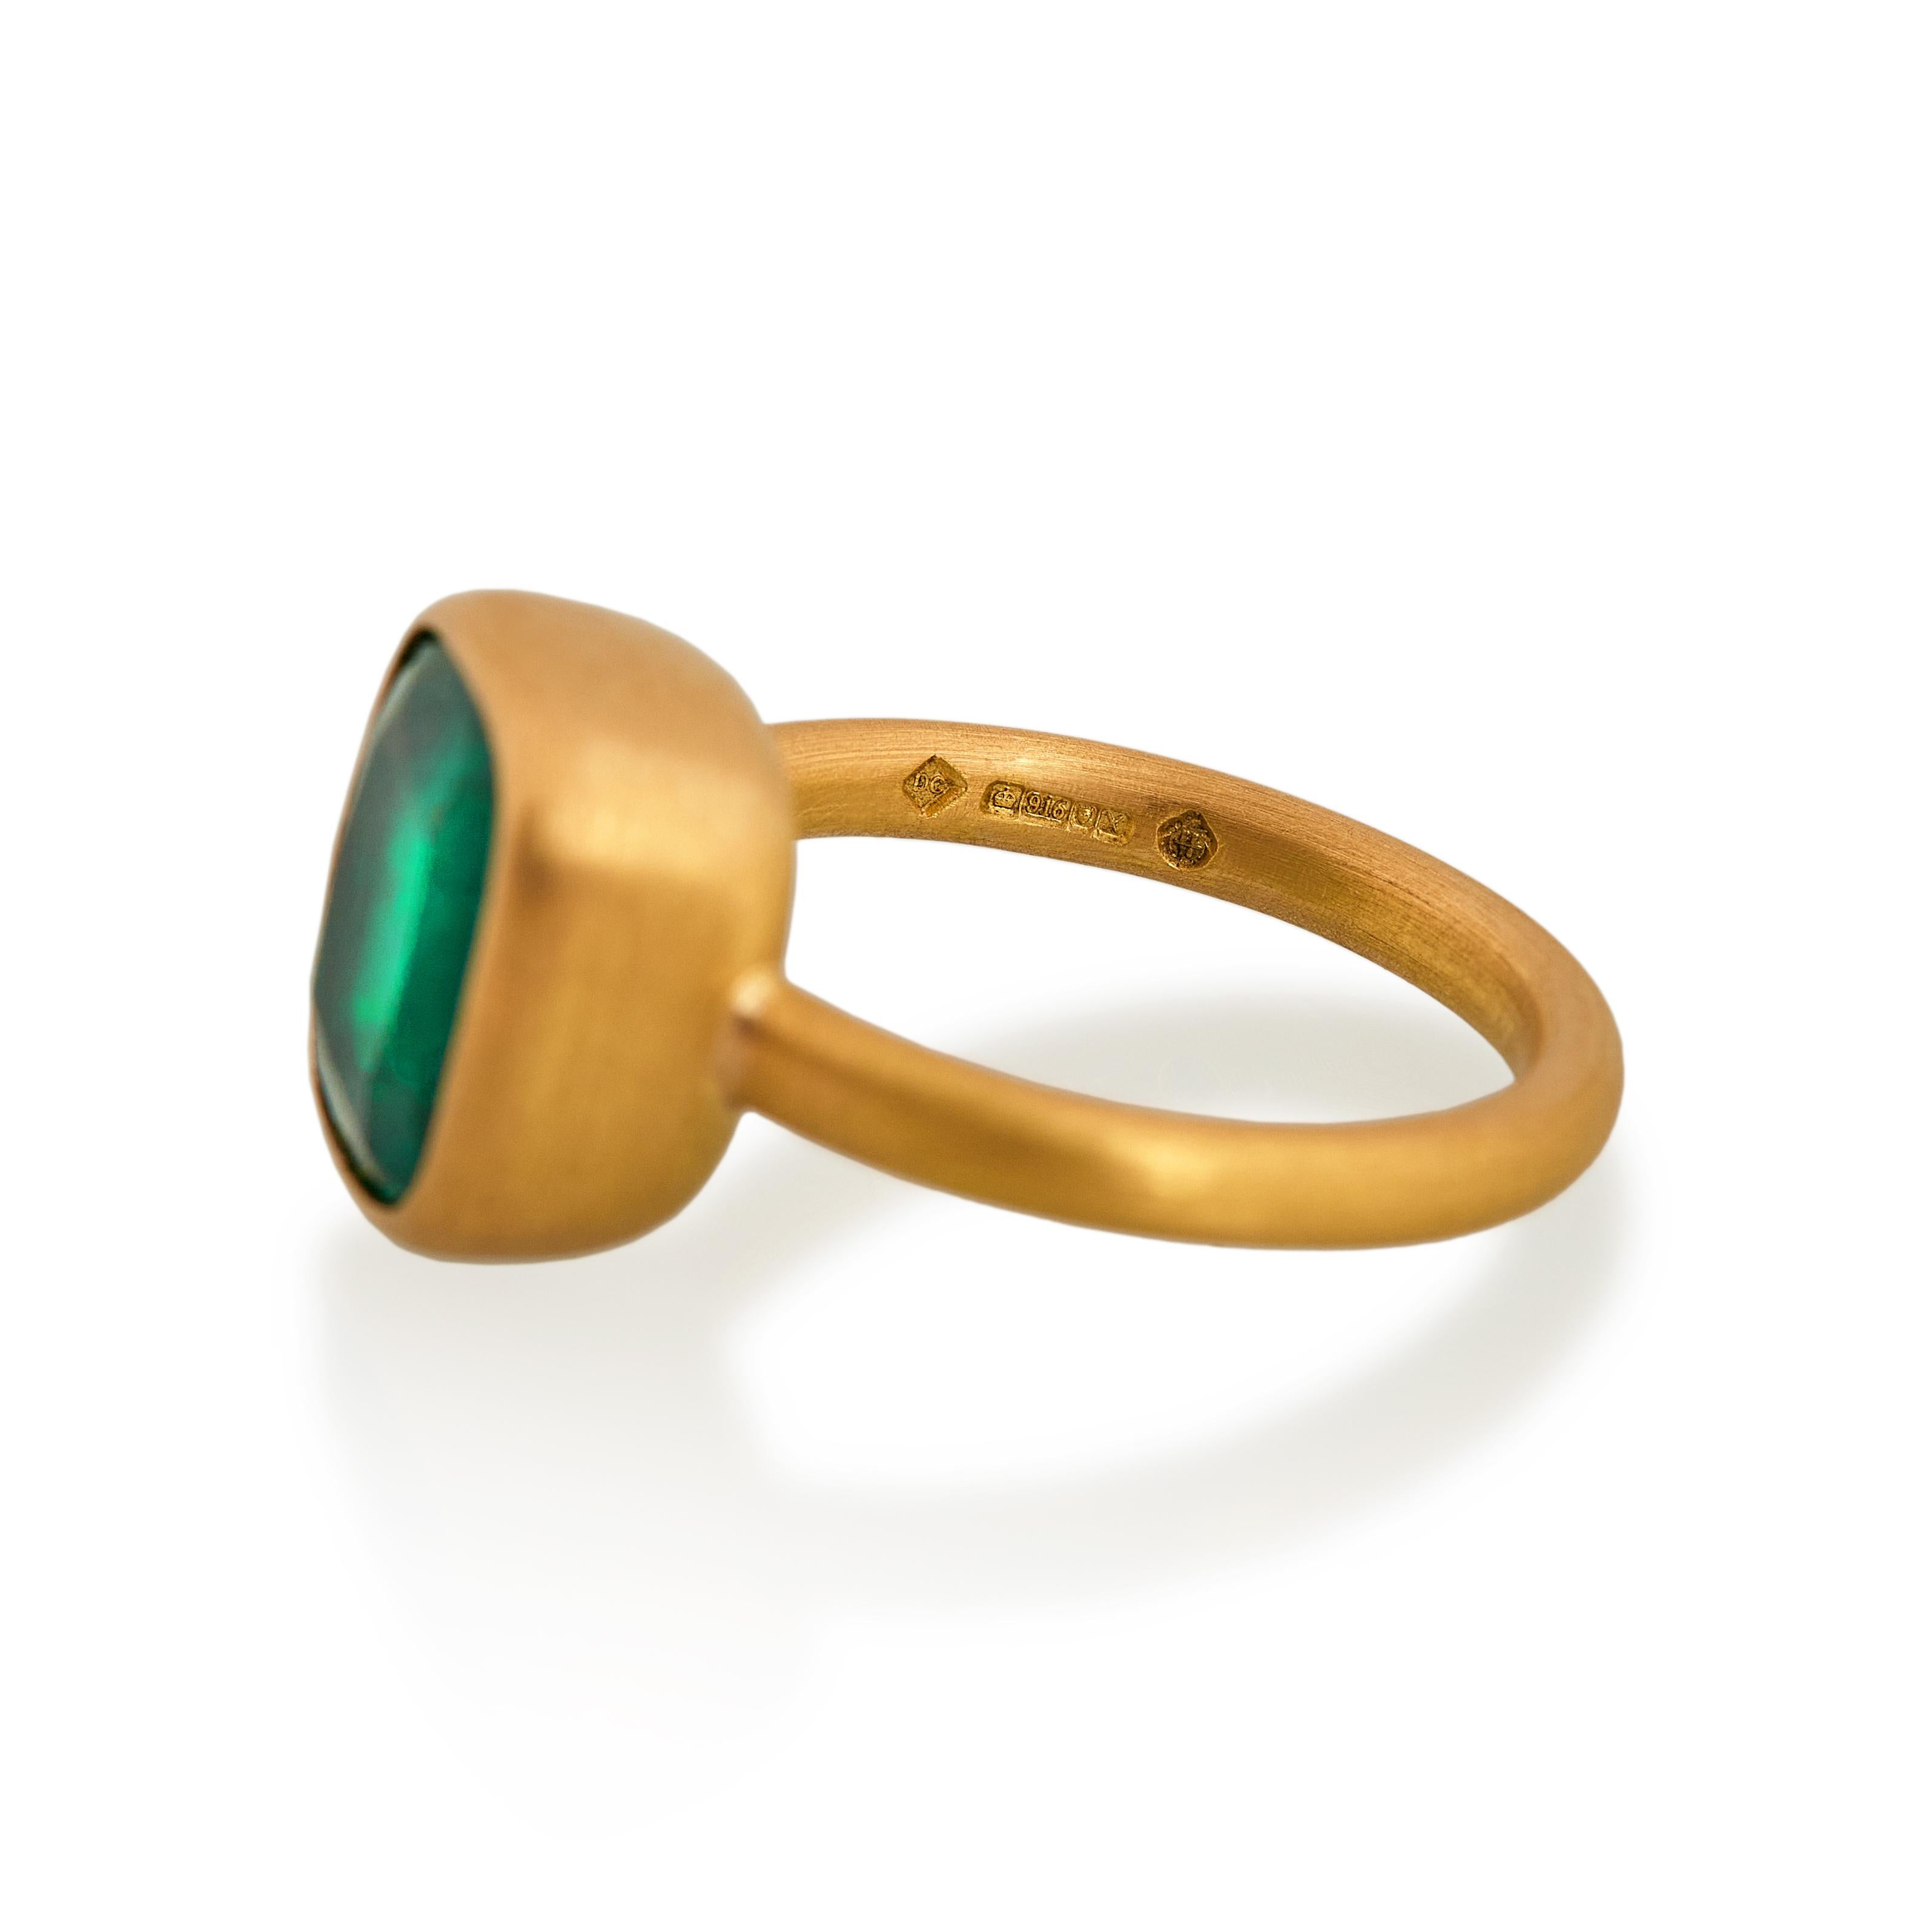 gwen stefani emerald ring